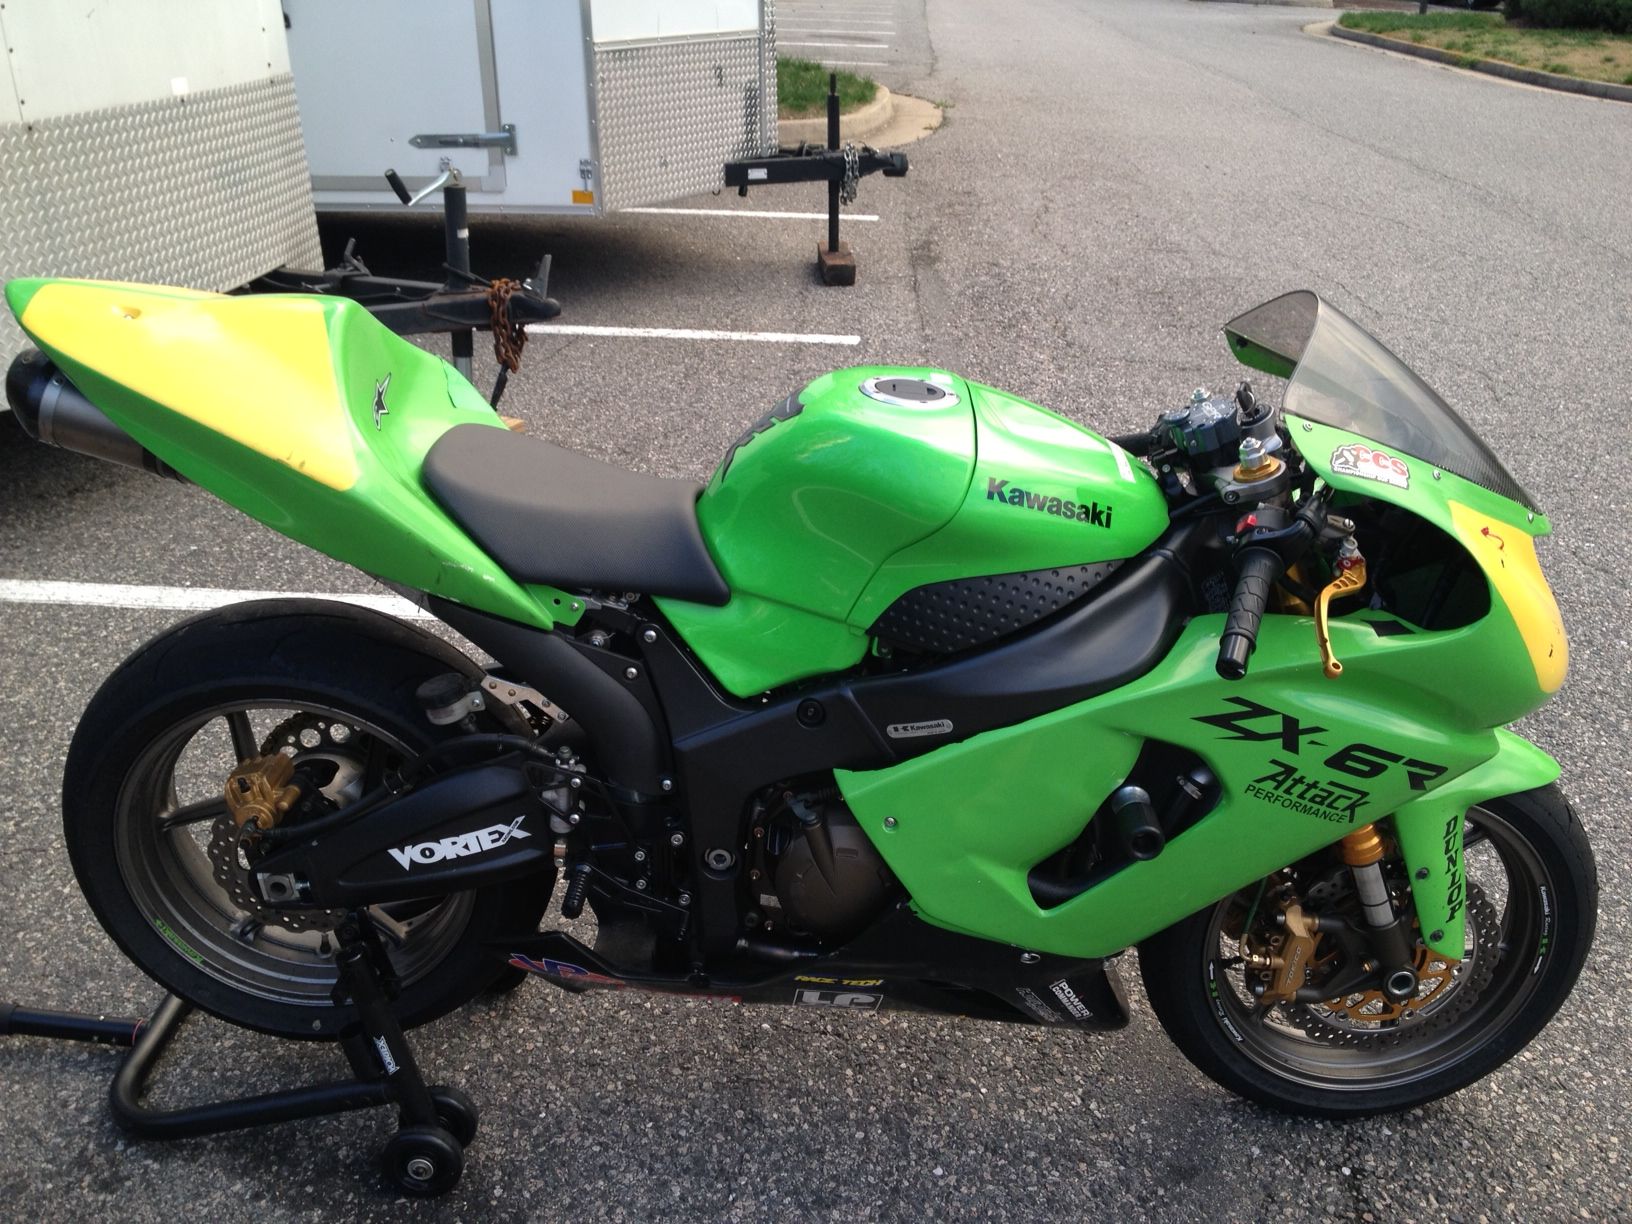 Обзор мотоцикла kawasaki gpz600r (ninja 600r)